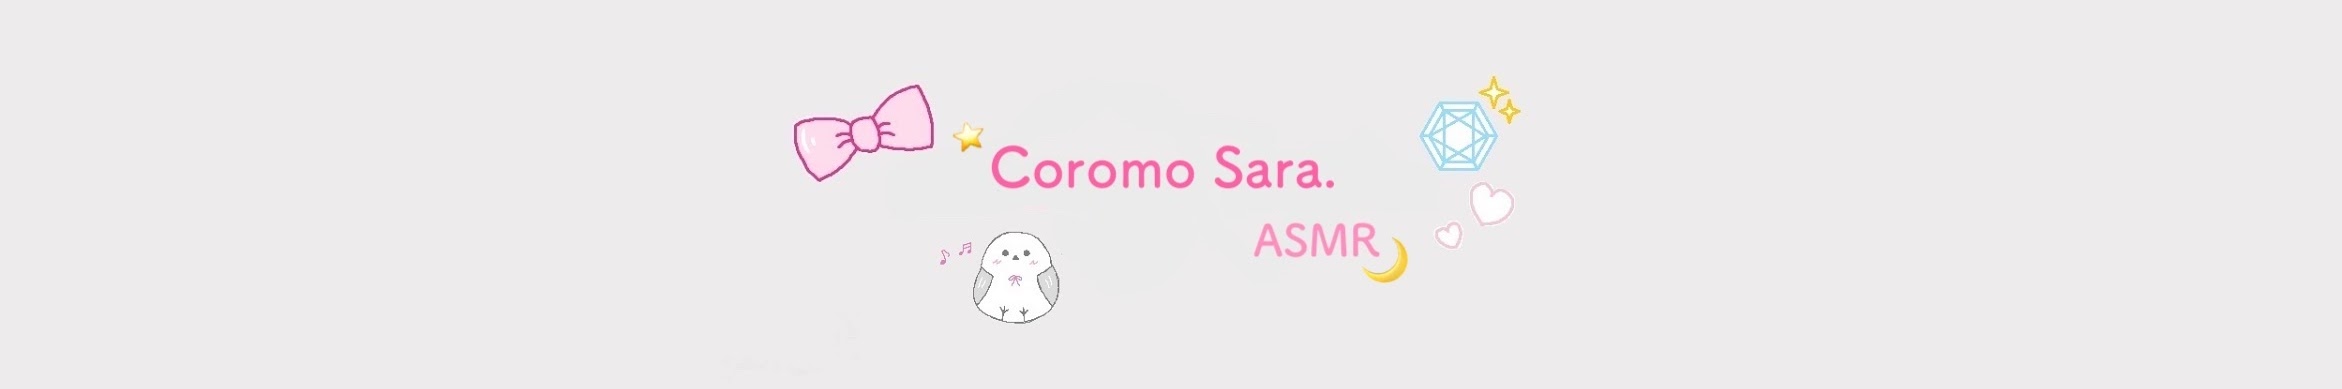 Coromo-Sara.-ASMR_banner